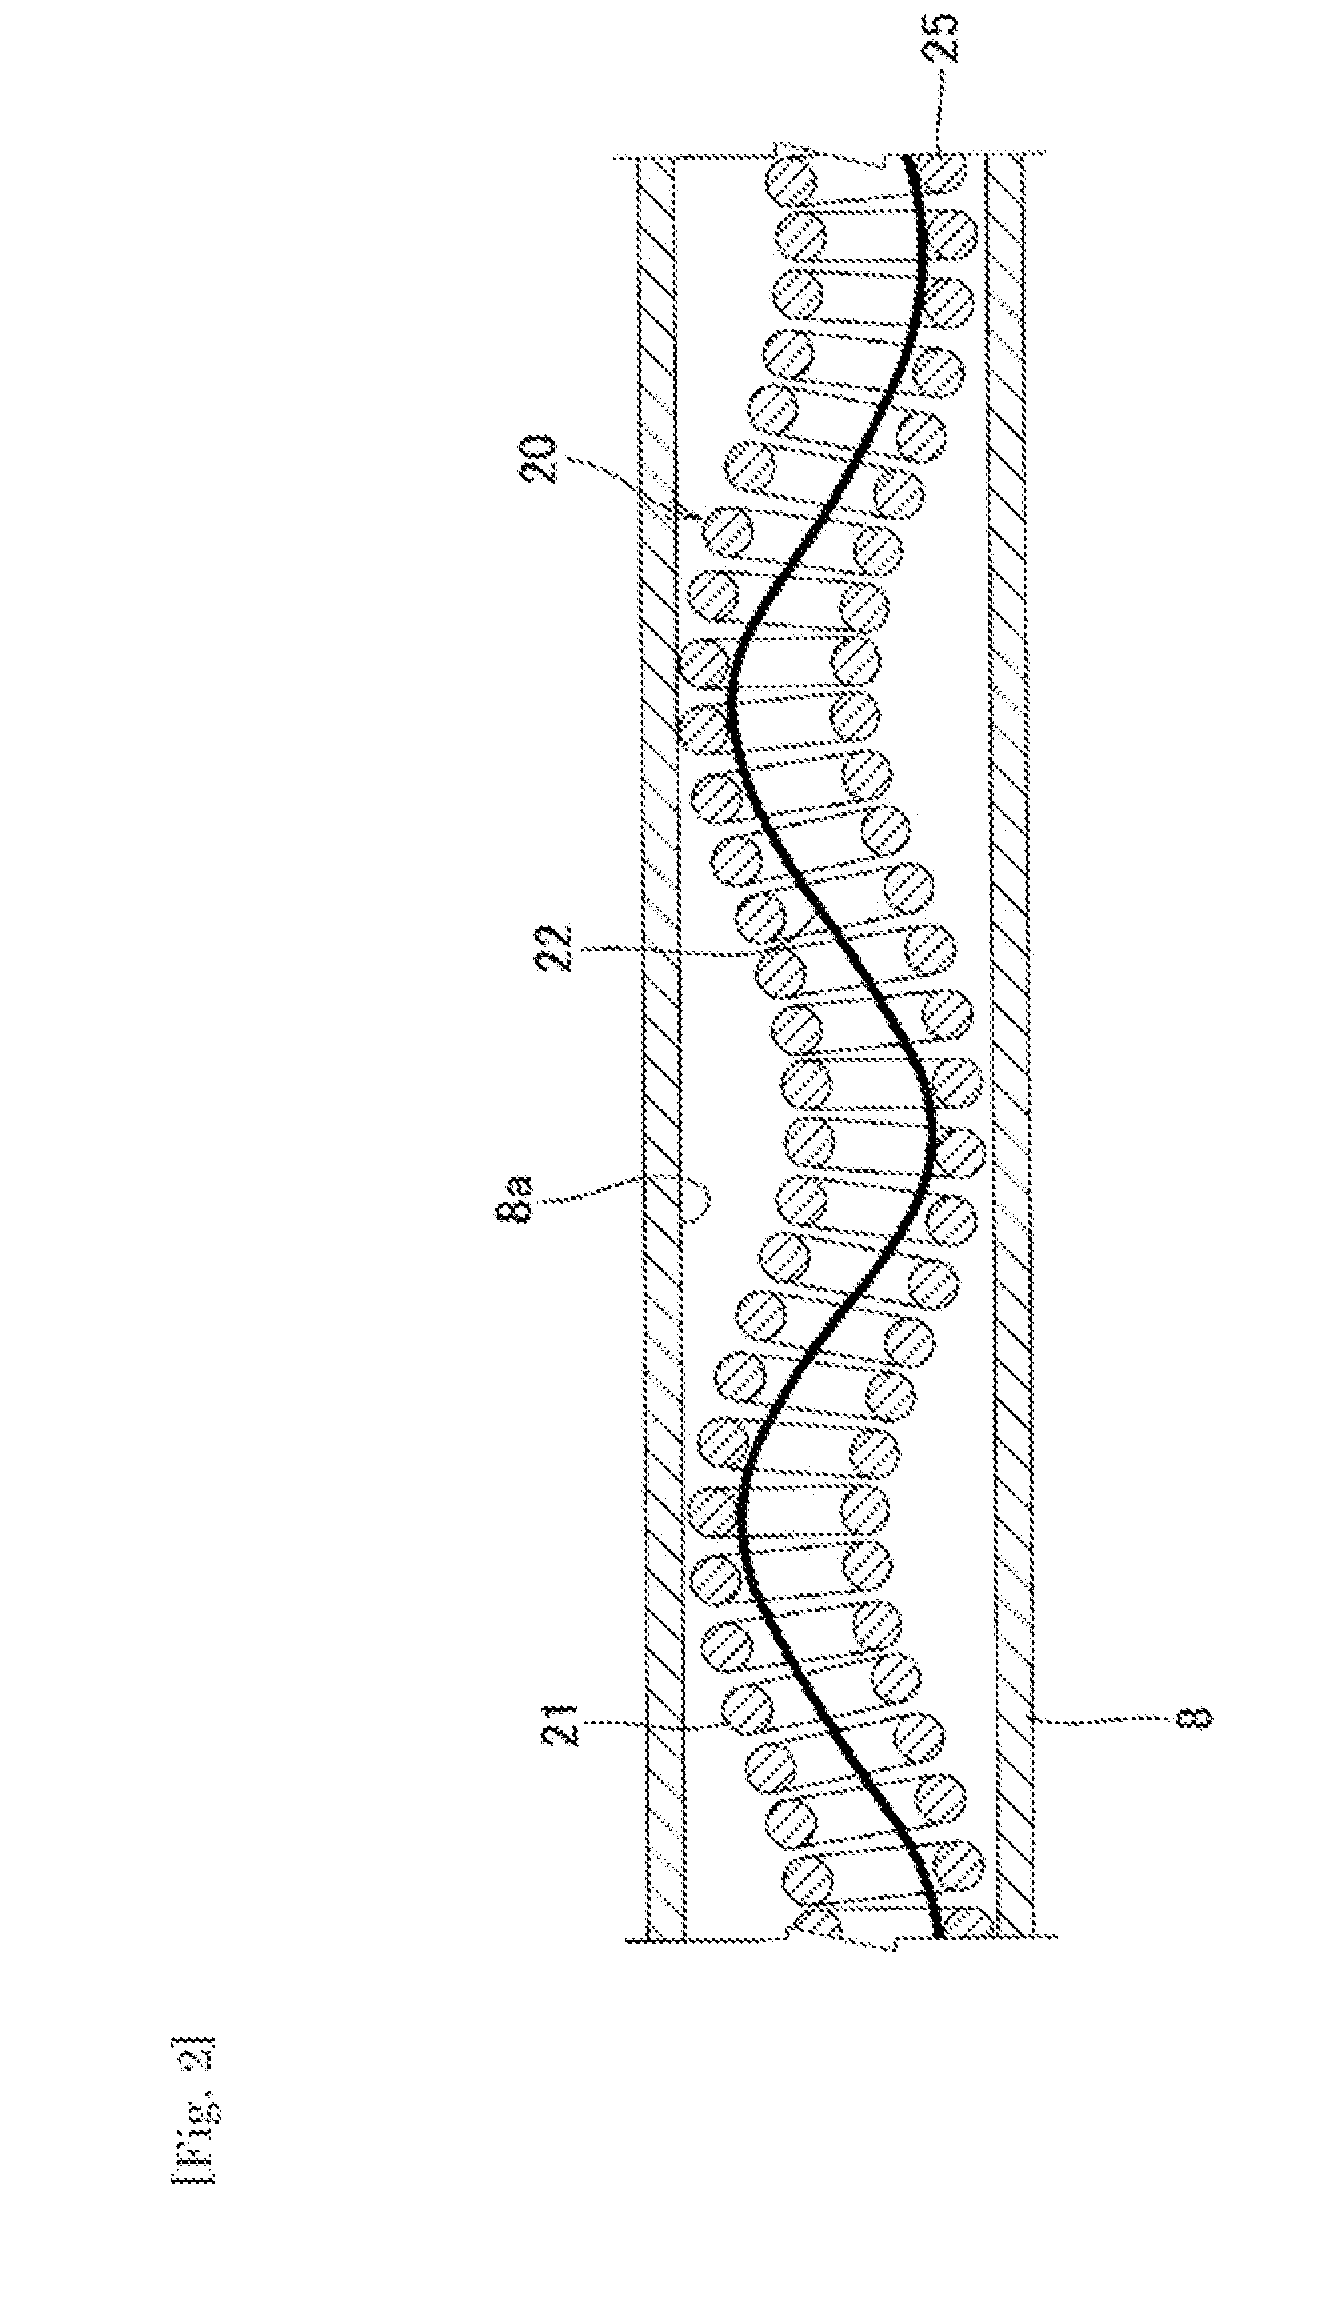 Embolization coil